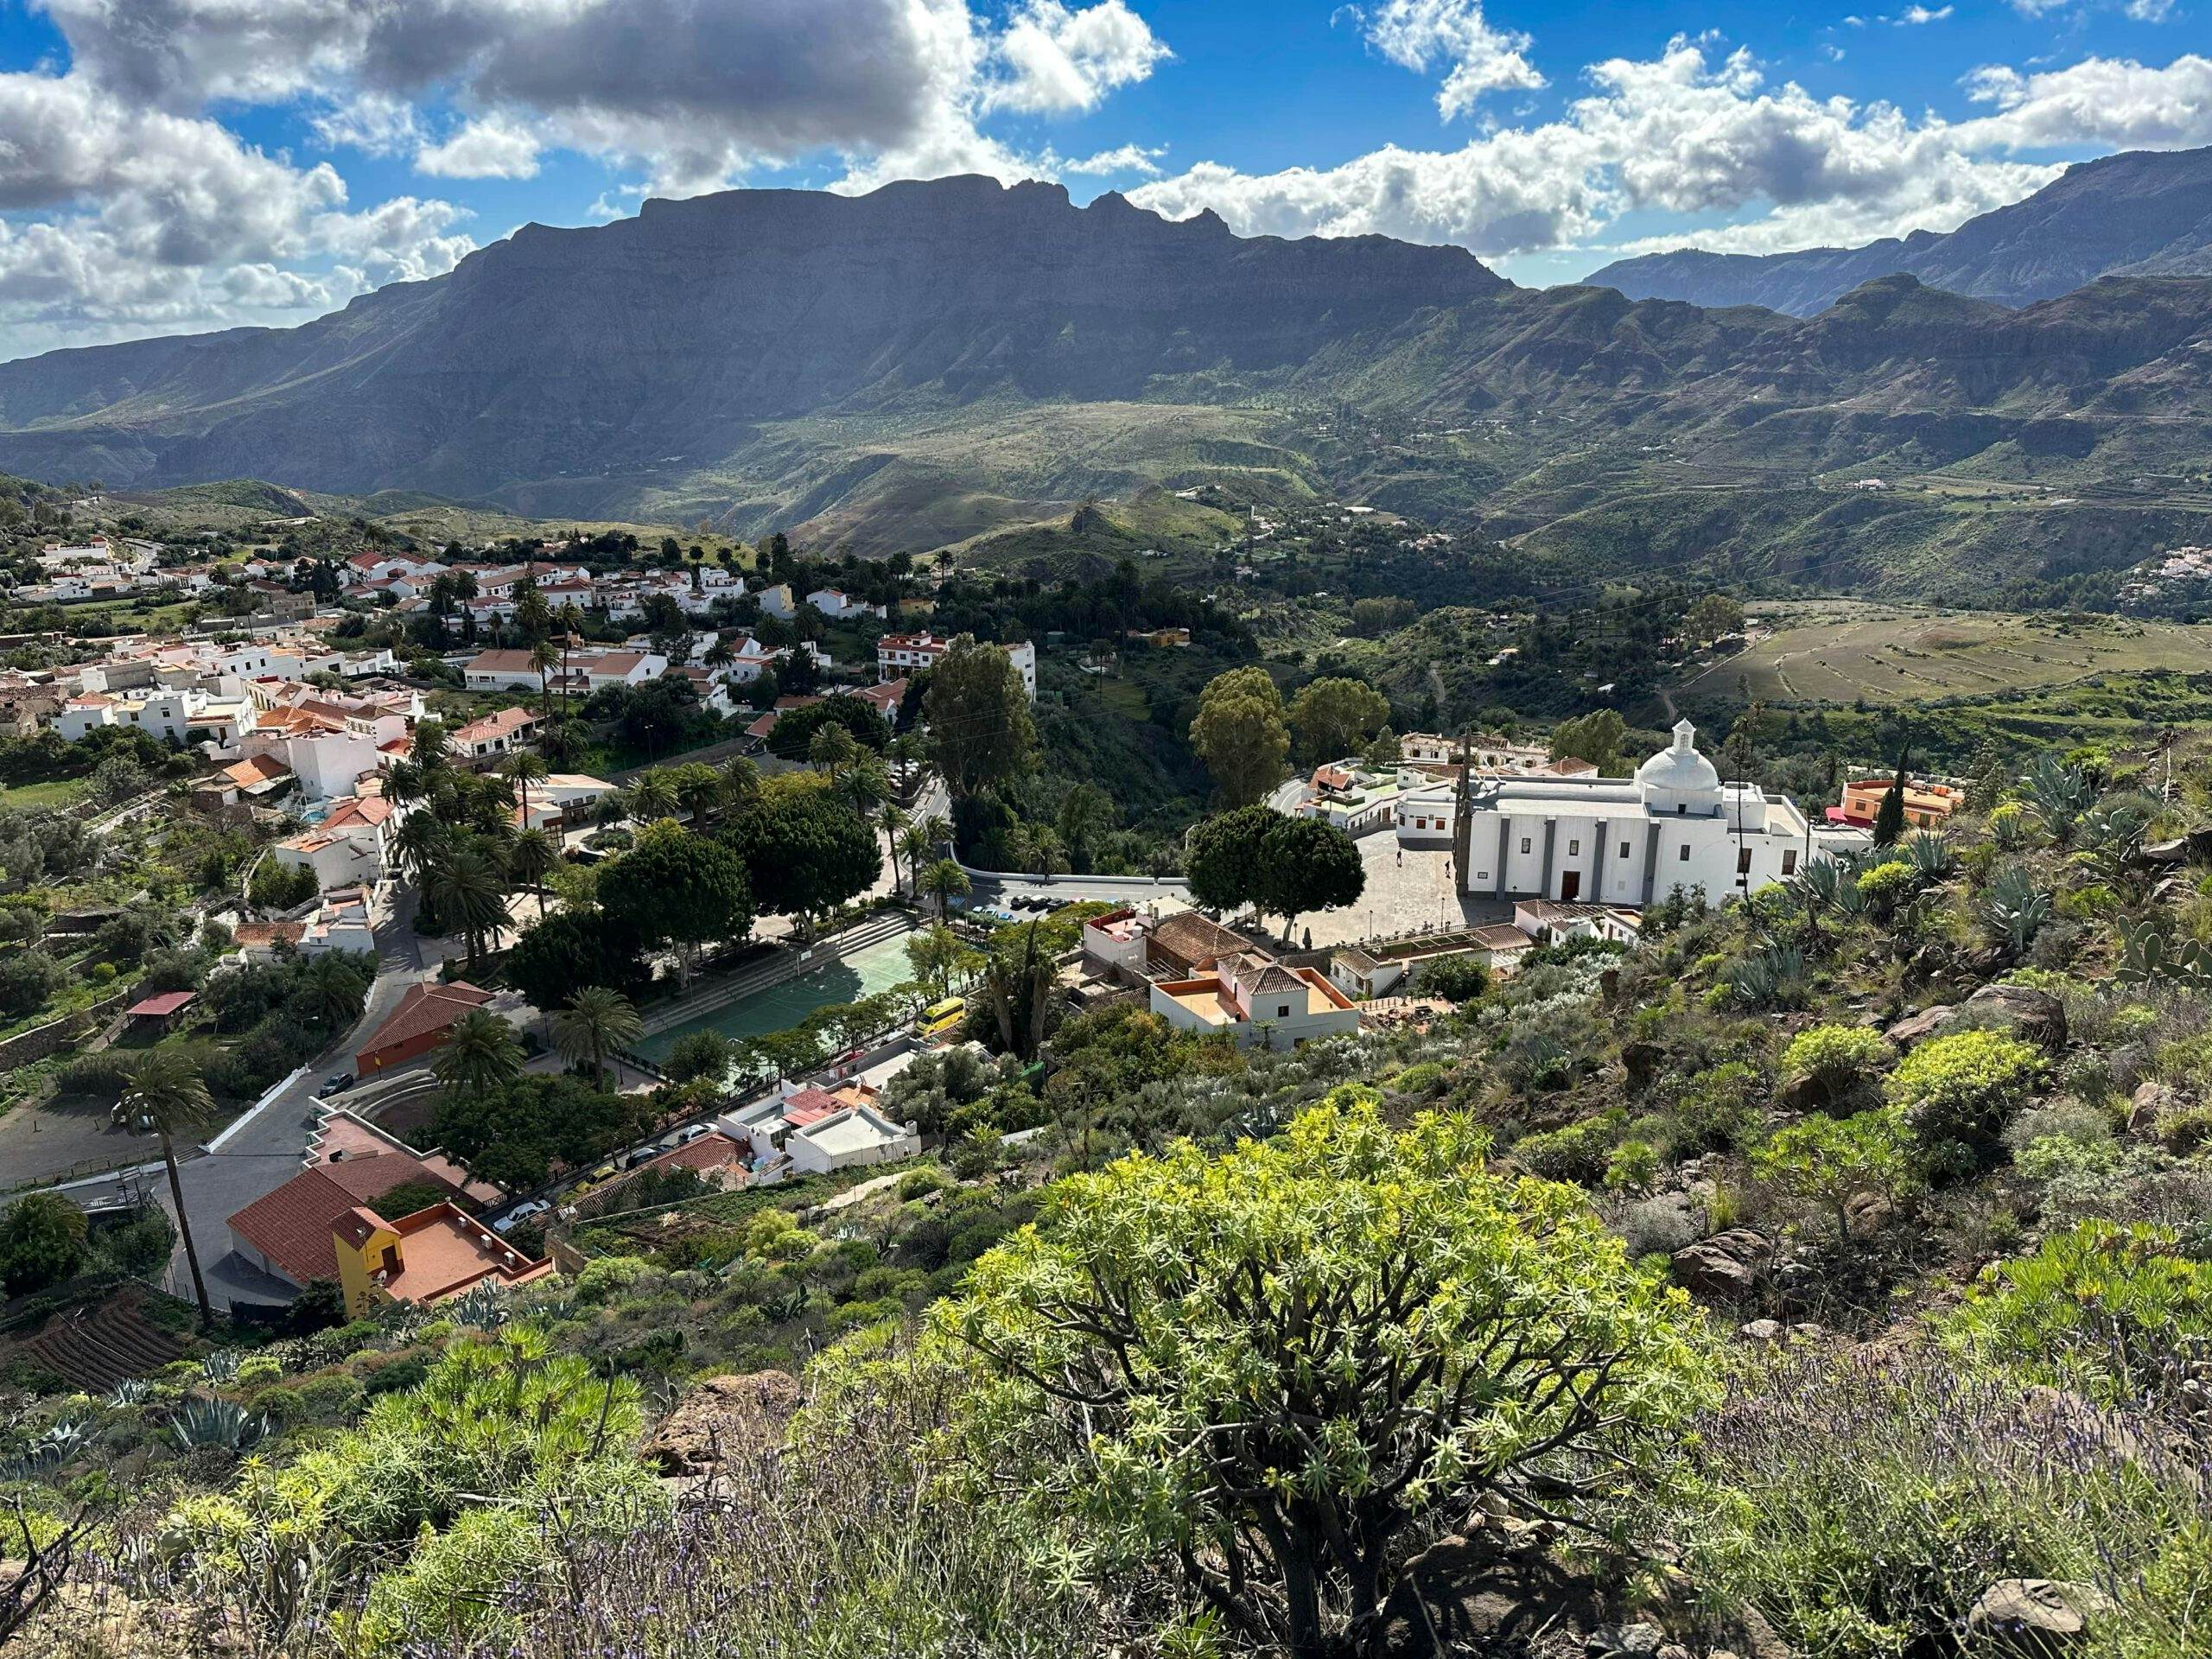 View of Santa Lucia de Tirajana from the hiking trail